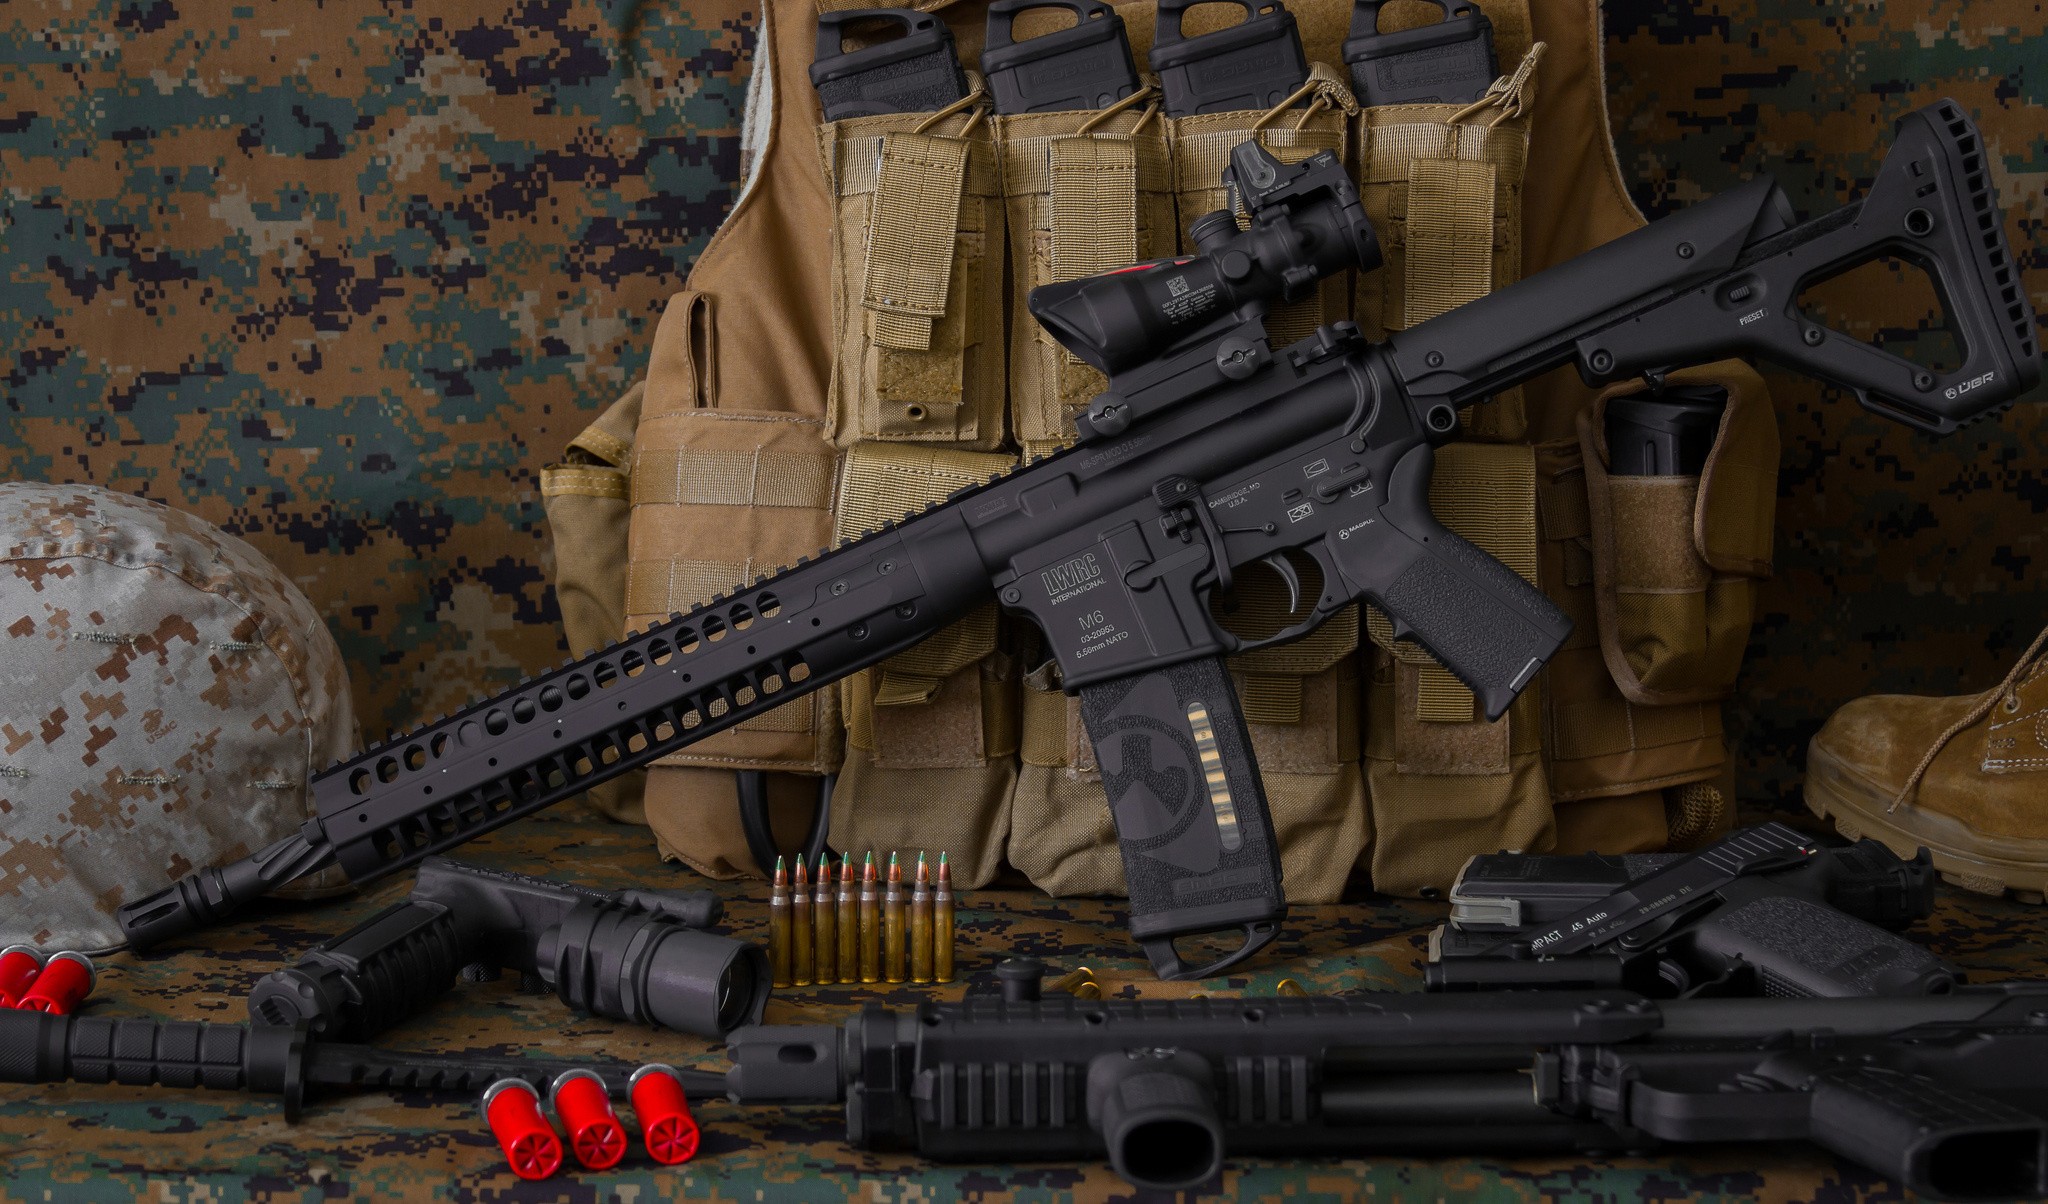 General 2048x1204 AR-15 magpul shotgun ammunition American firearms gun weapon side view bulletproof vest scopes camouflage helmet